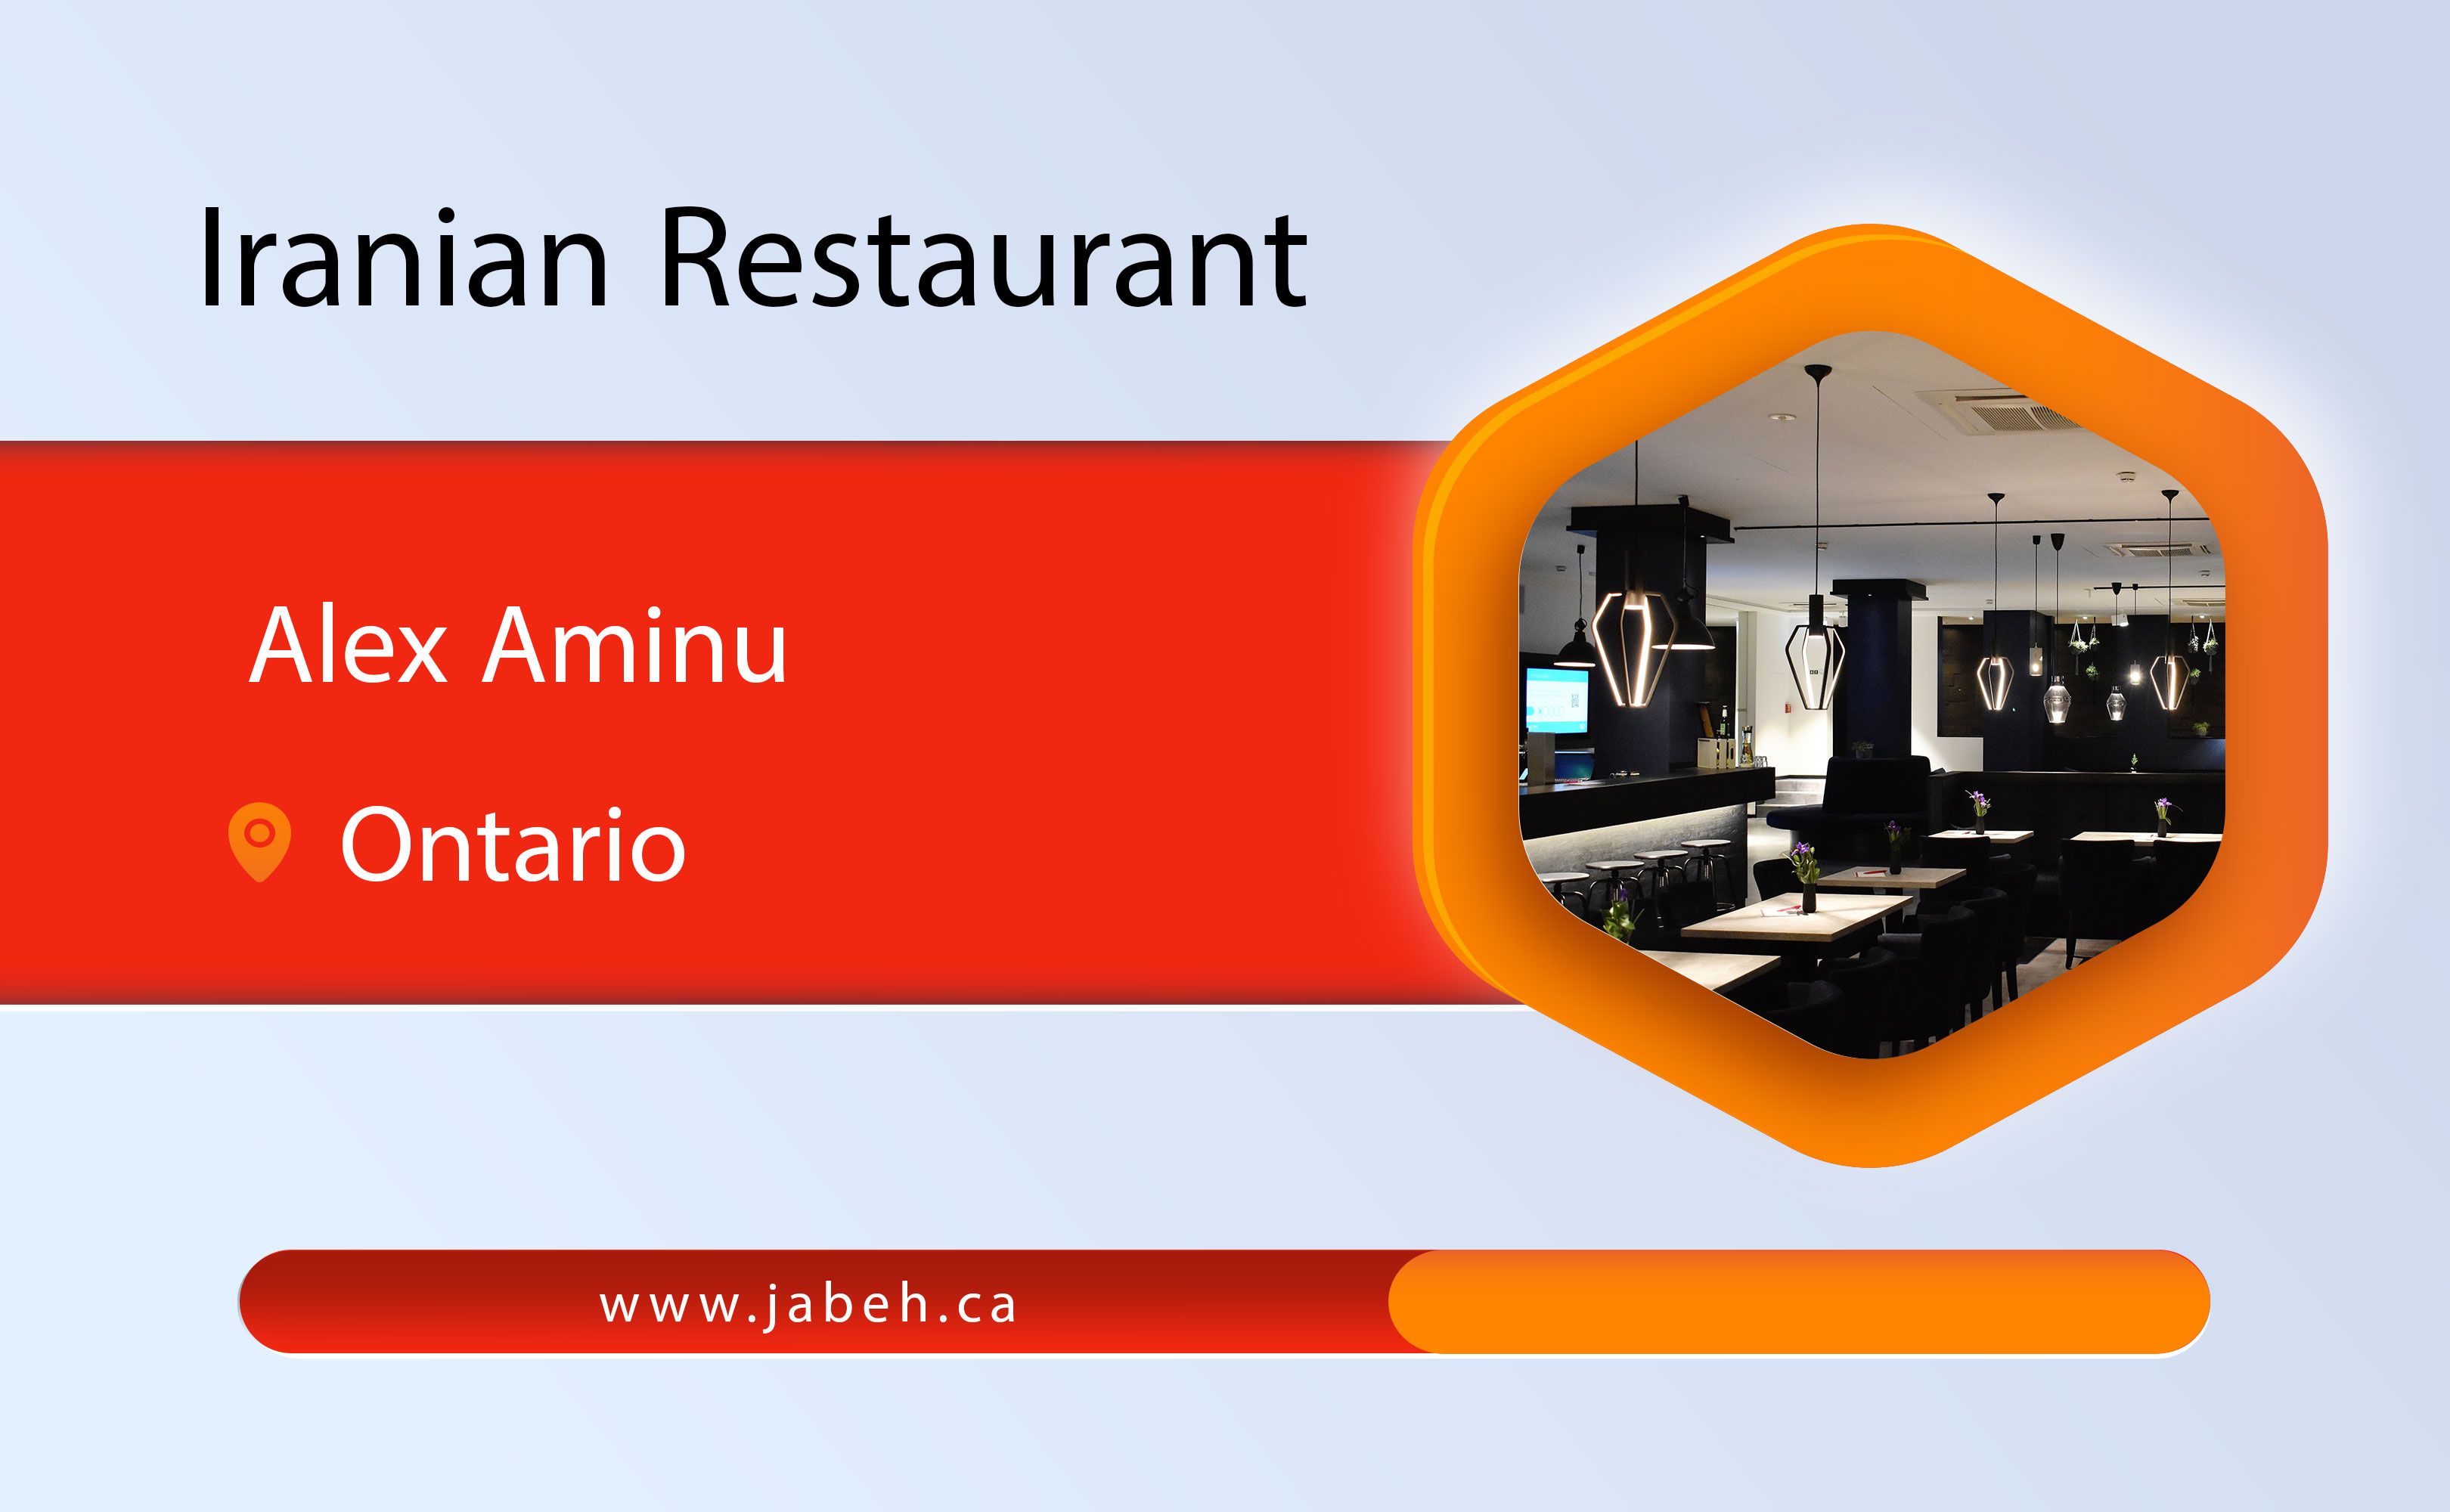 Alex Amino's Iranian restaurant in Ontario